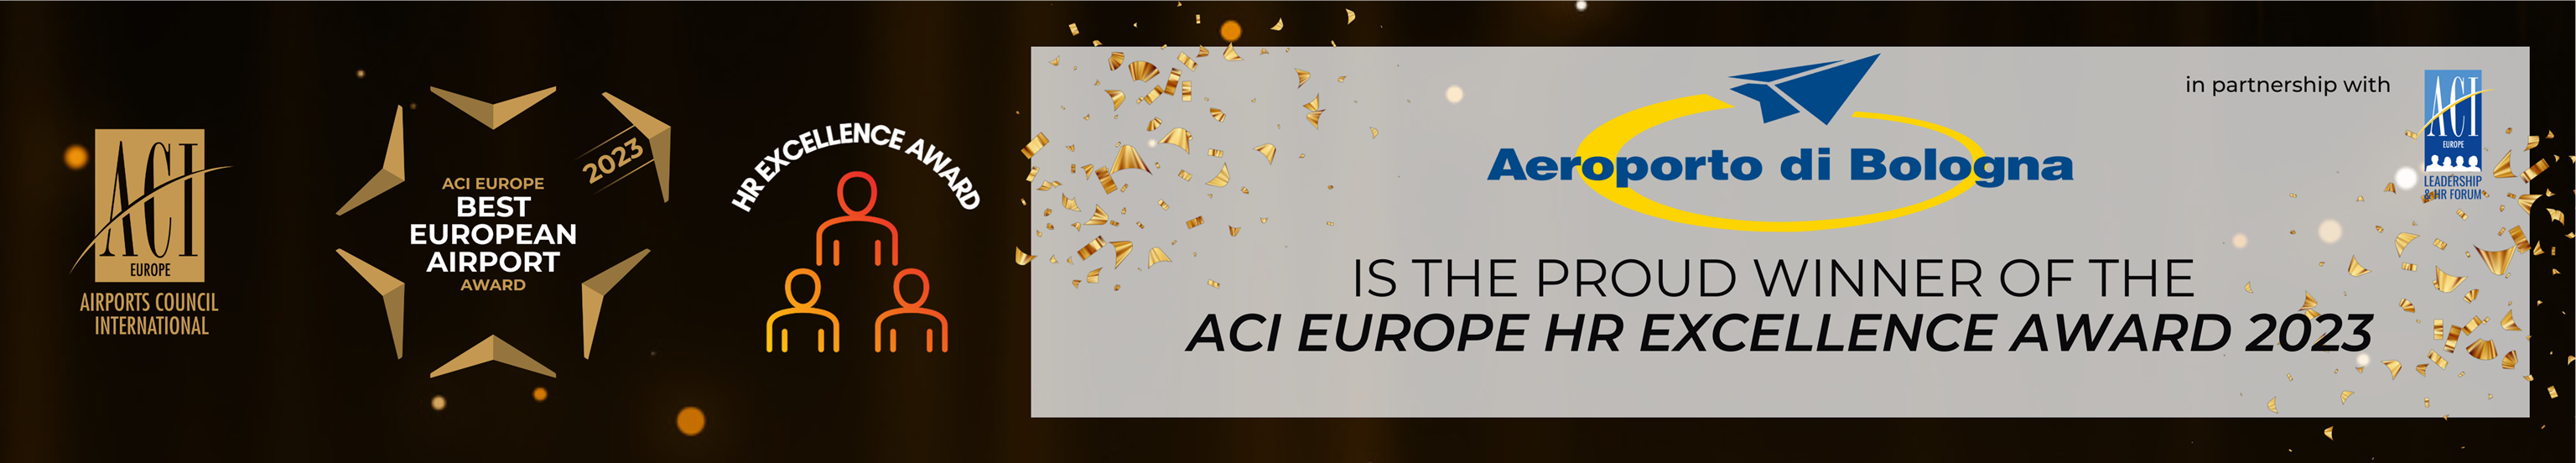 ACI Europe HR Excellence Award 2023